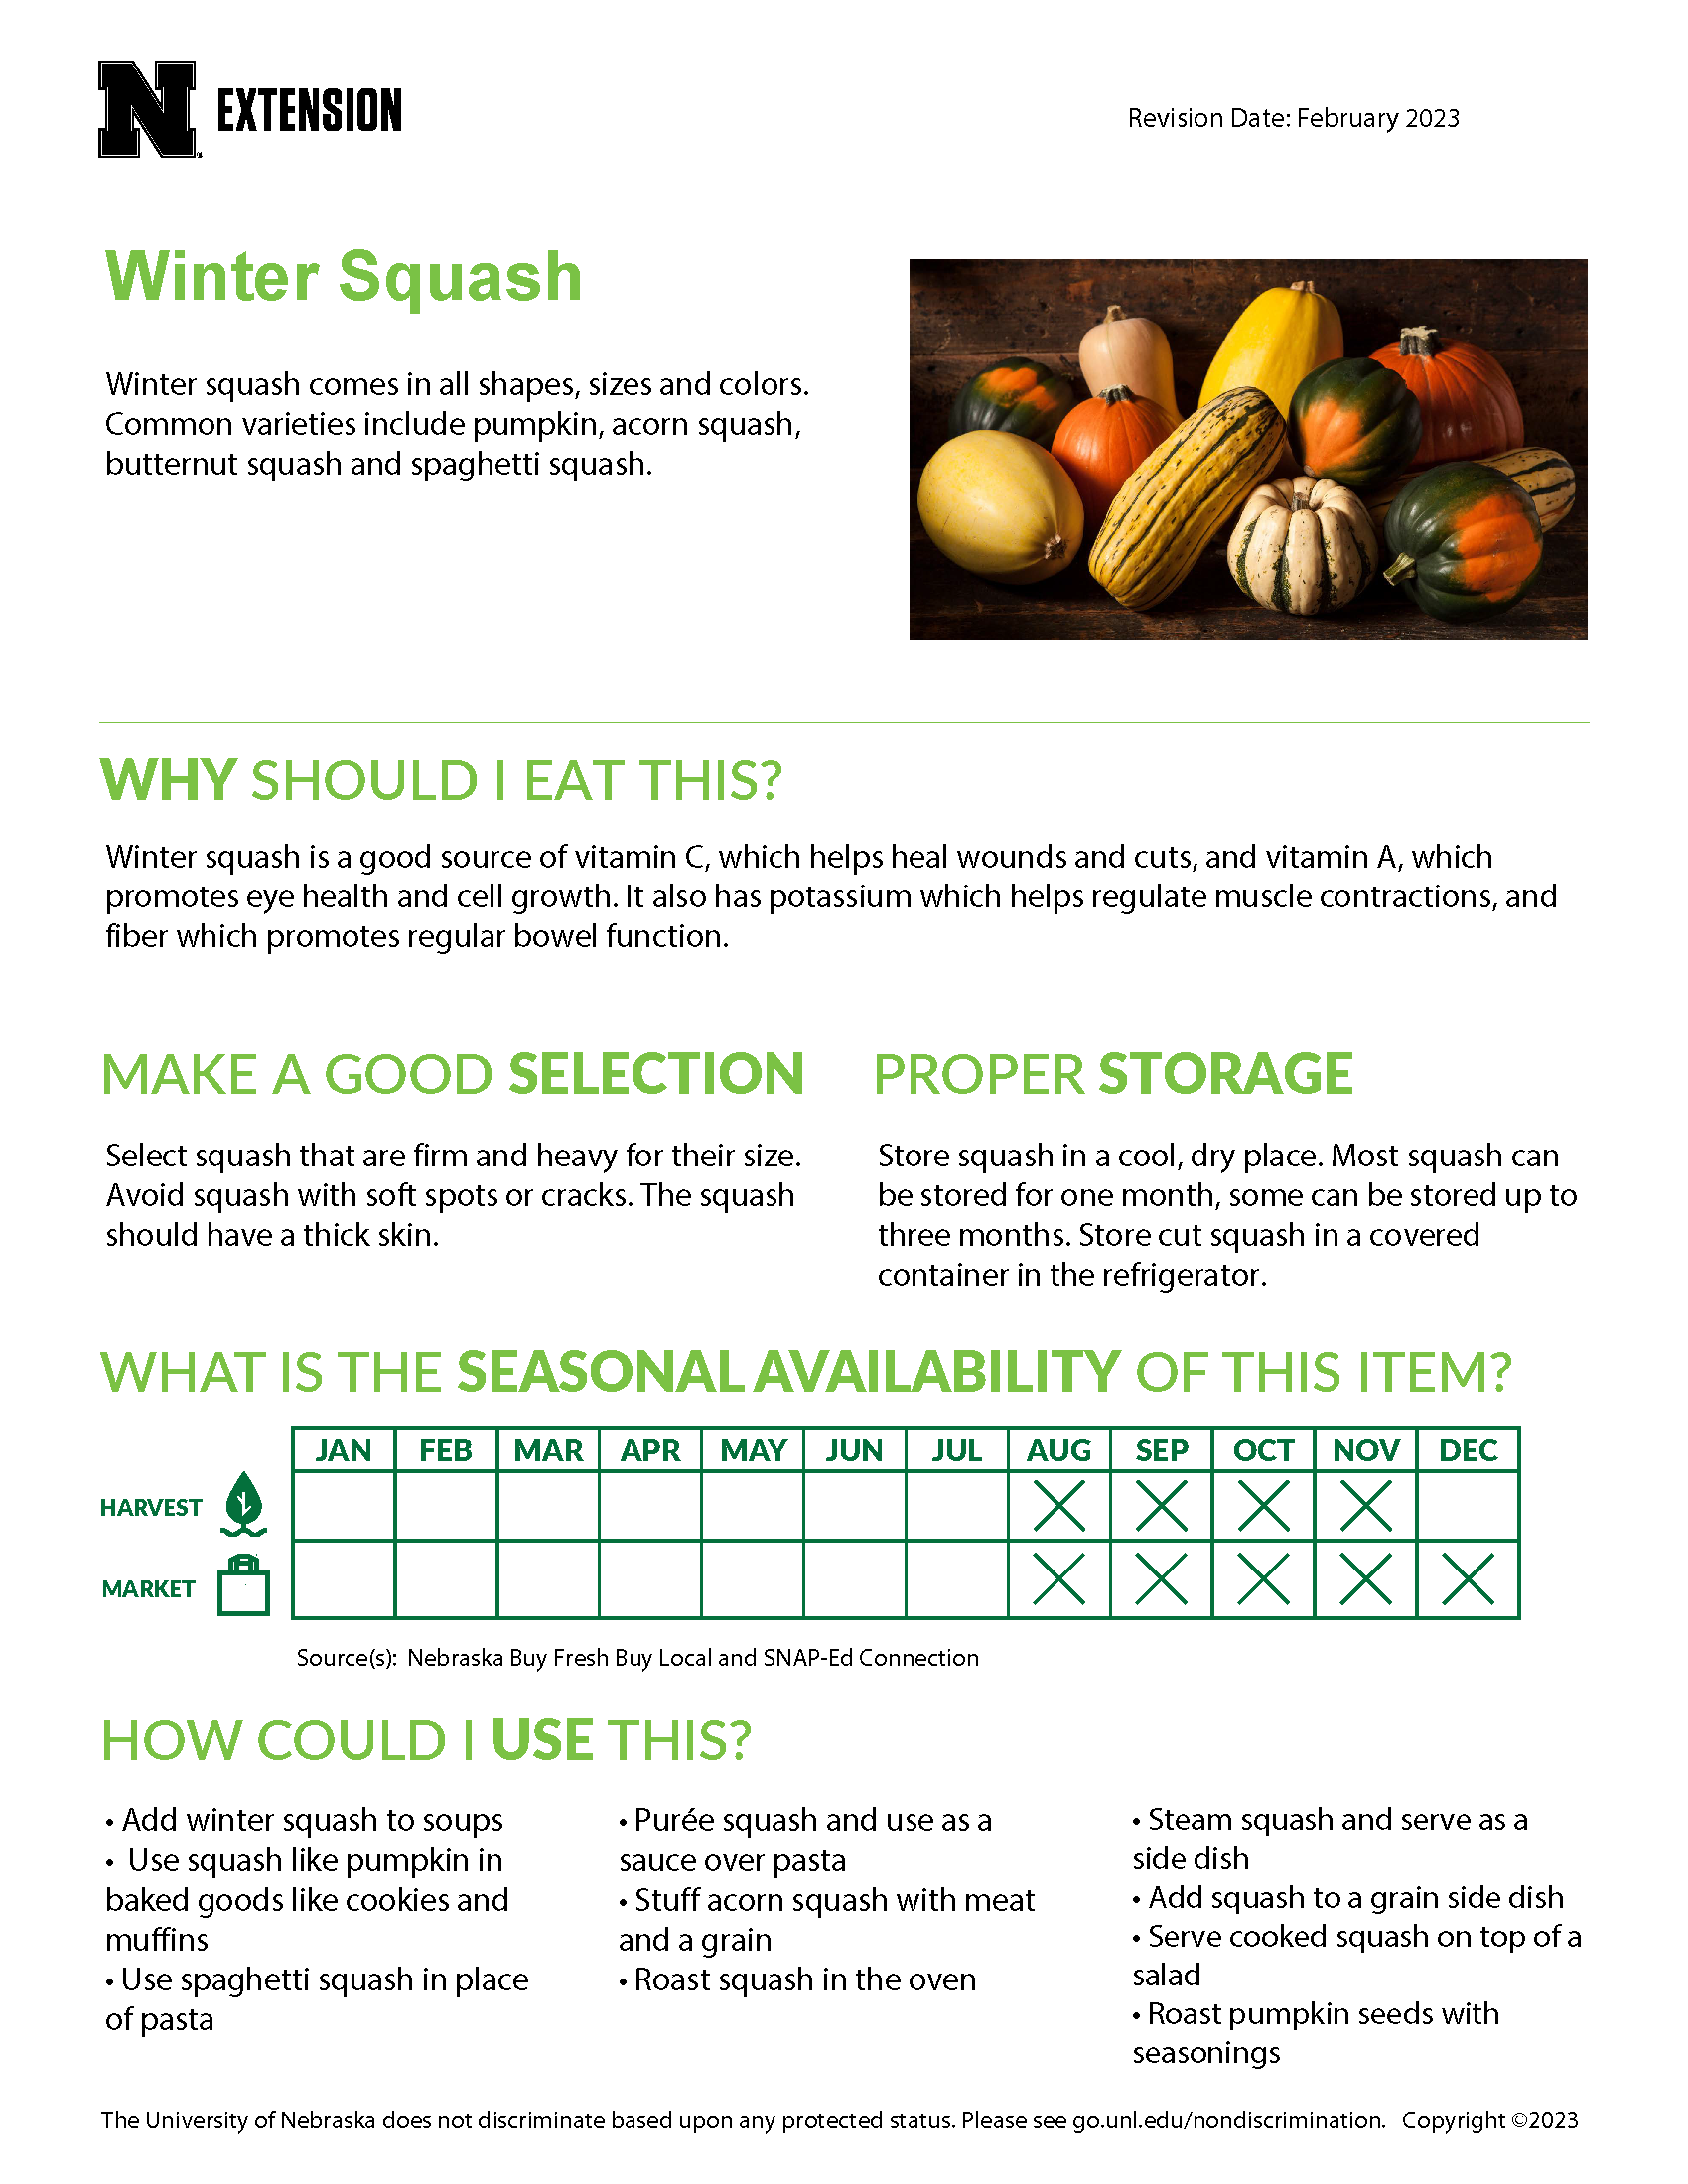 winter squash identification chart